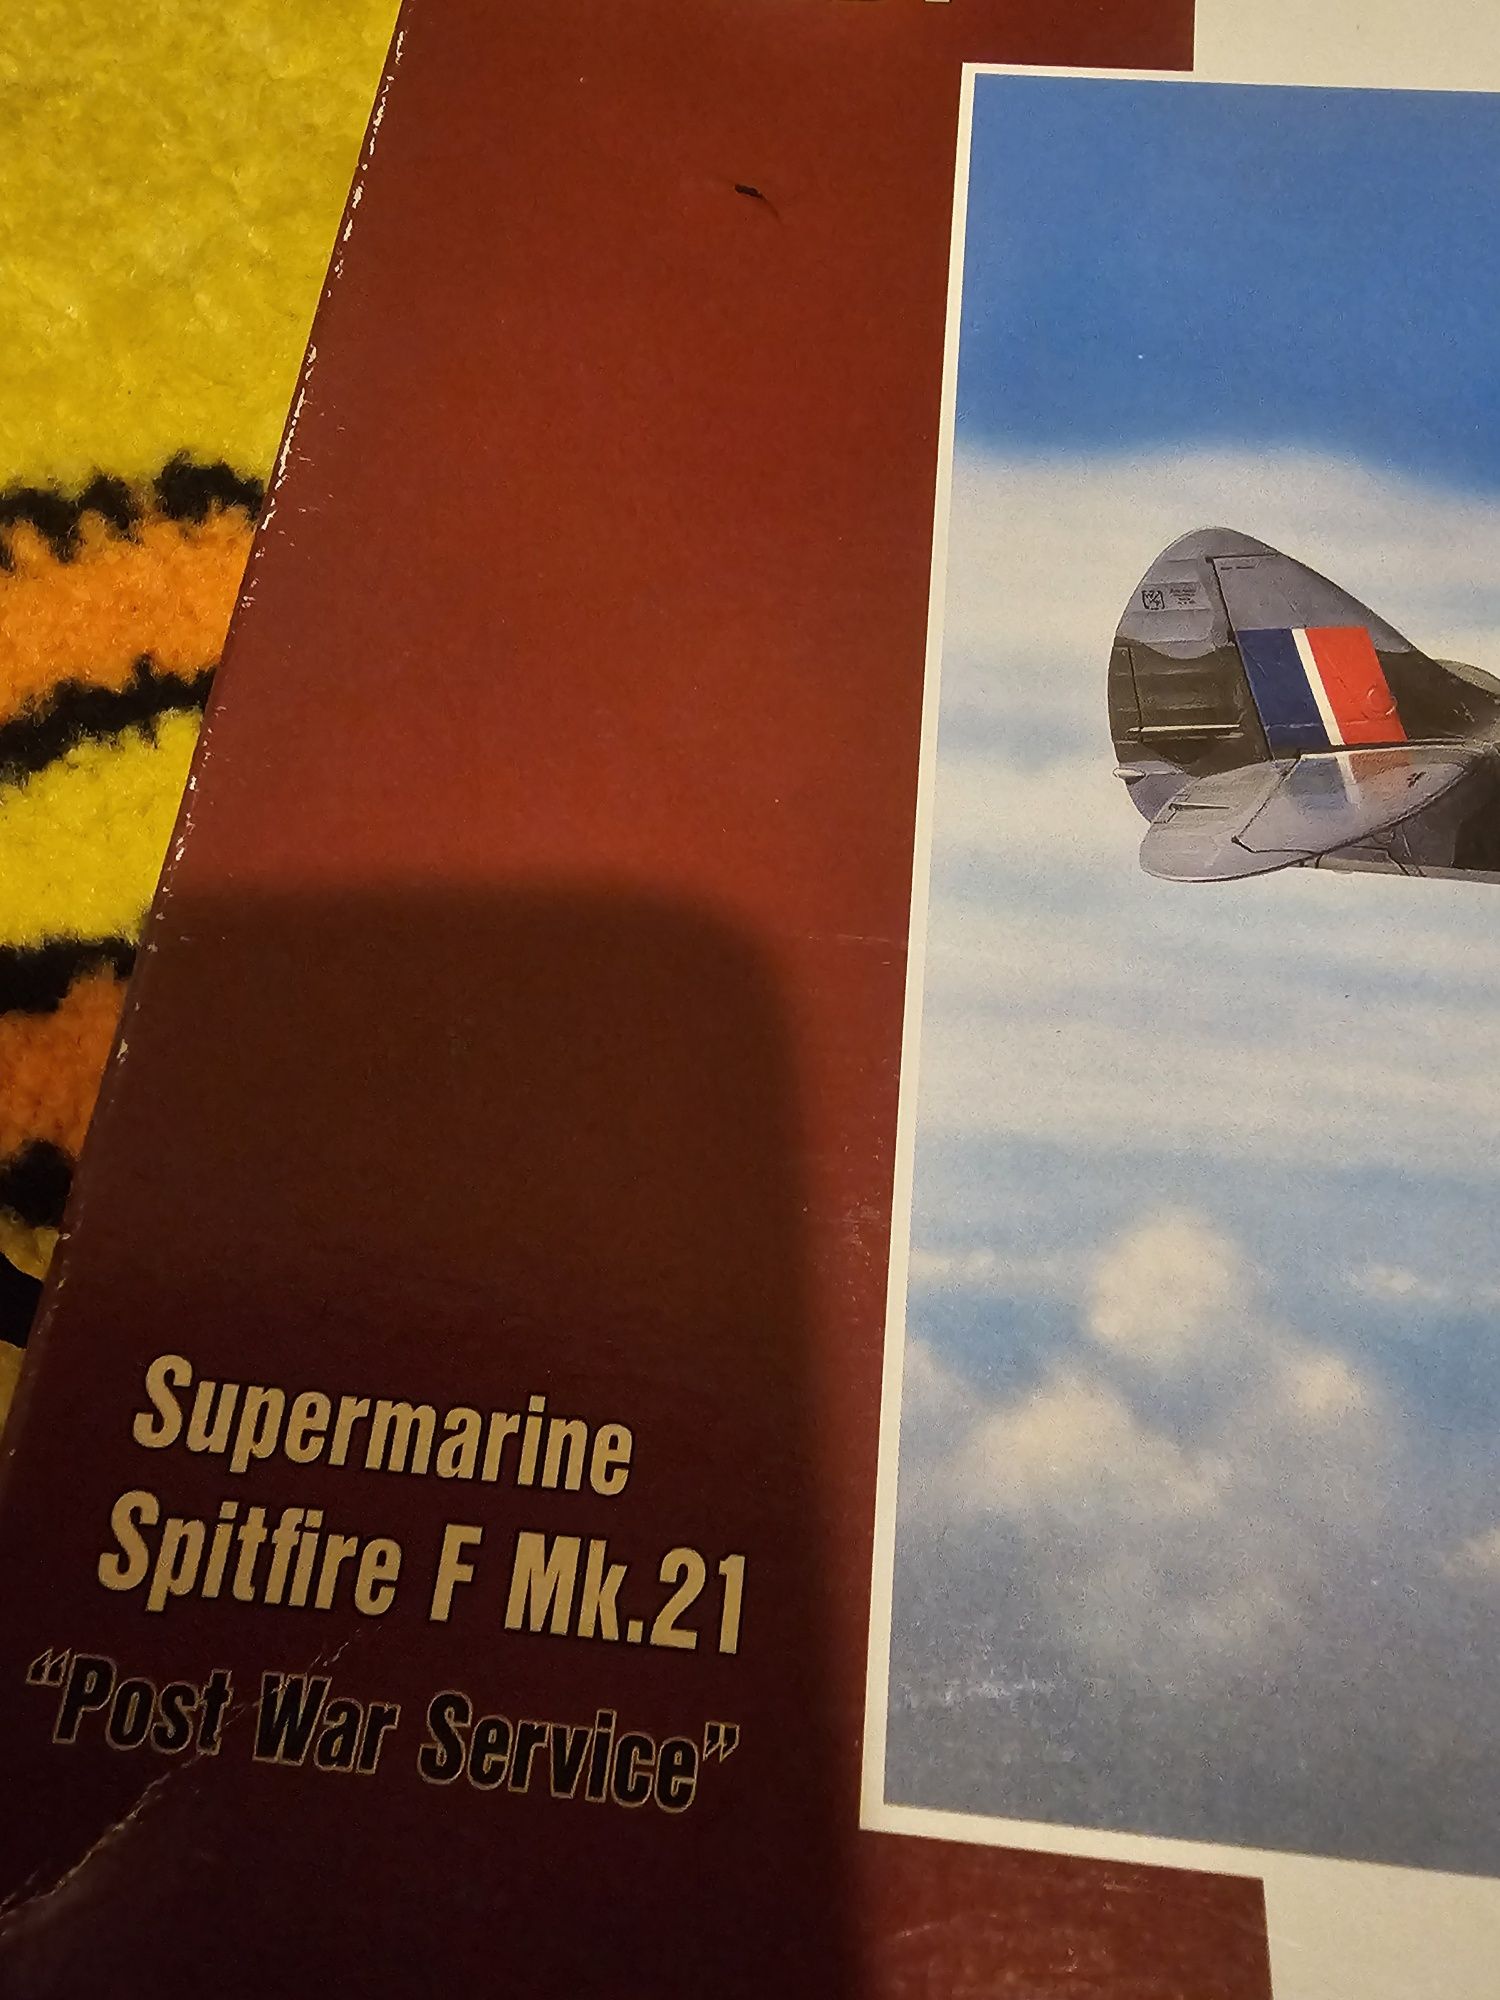 Macheta Supermarine Spitfire F Mk 21  Special Hobby